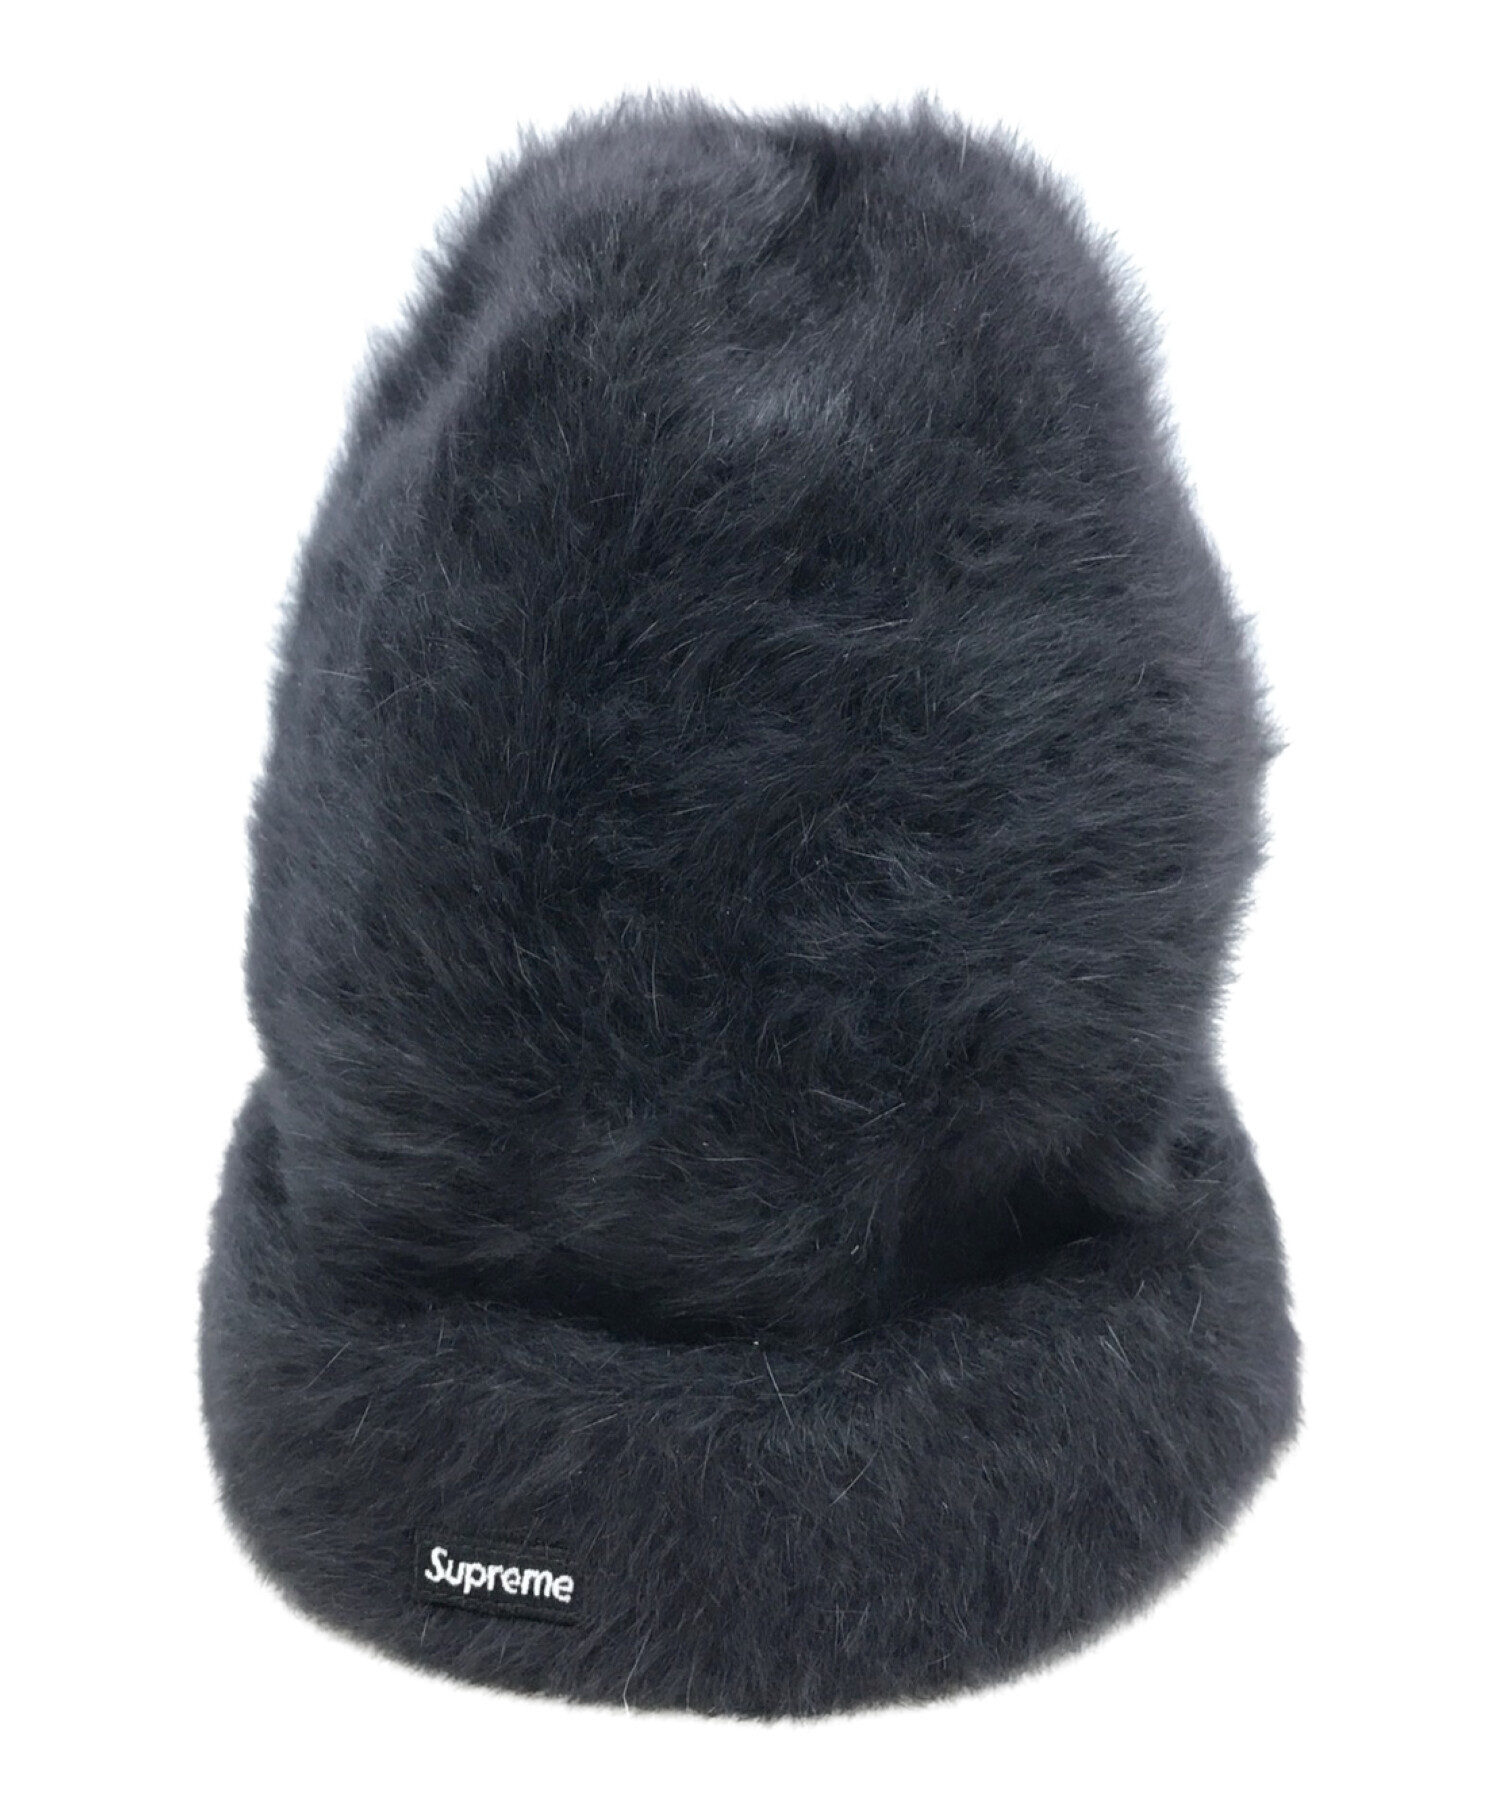 Supreme×KANGOL (シュプリーム×カンゴール) コラボニット帽 ブラック サイズ:ONE SIZE